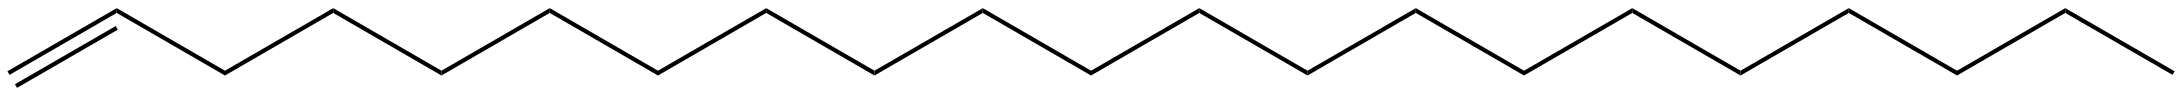 Image of 1-heneicosene